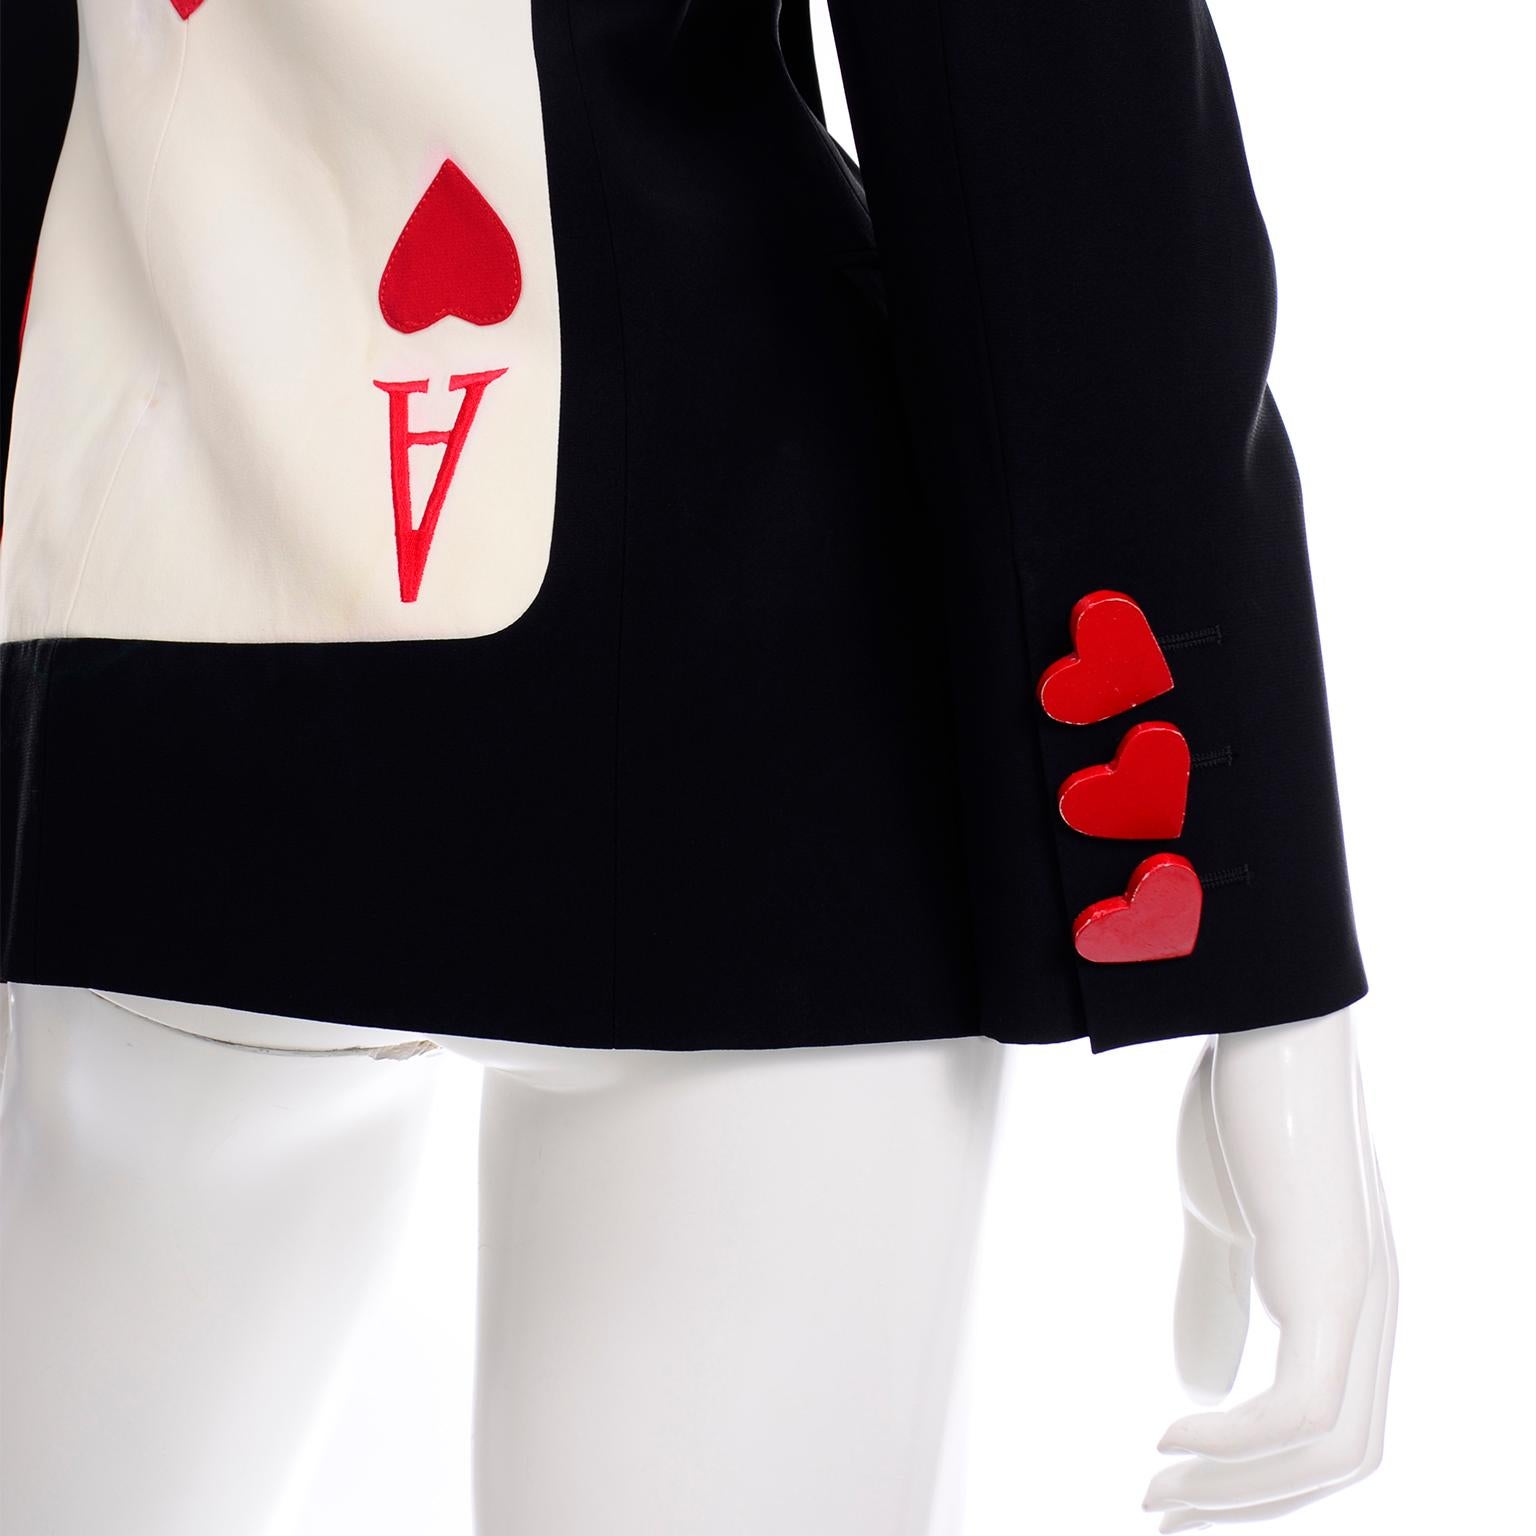 Rare Franco Moschino Couture Juvant Ace of Hearts Blazer Jacket 1